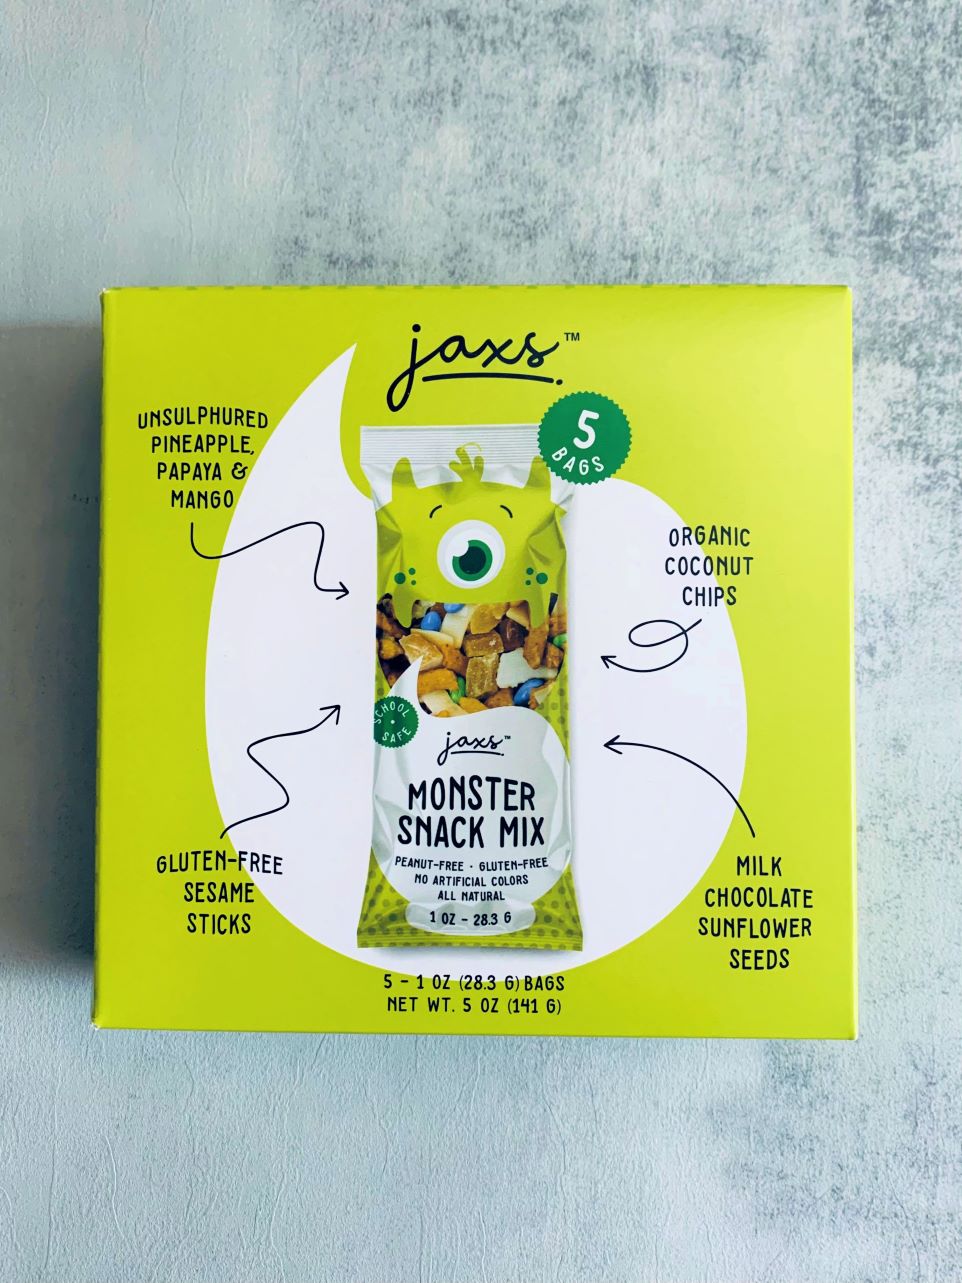 Jax's Monster Snack Mix box